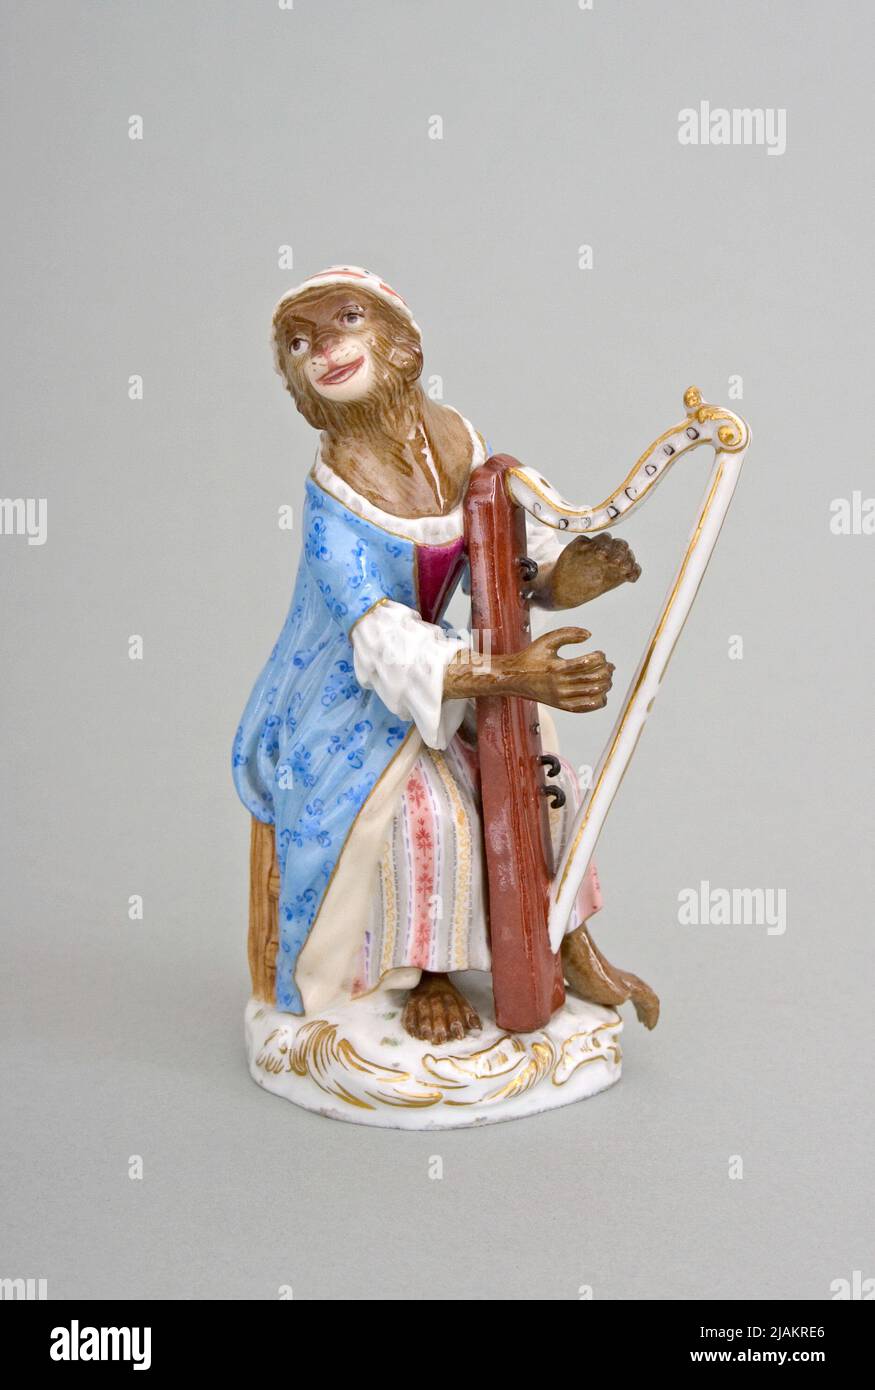 Figure from a monkey band, harpist K trader, Jan Joachim, Miśnia (Meissen) Stock Photo